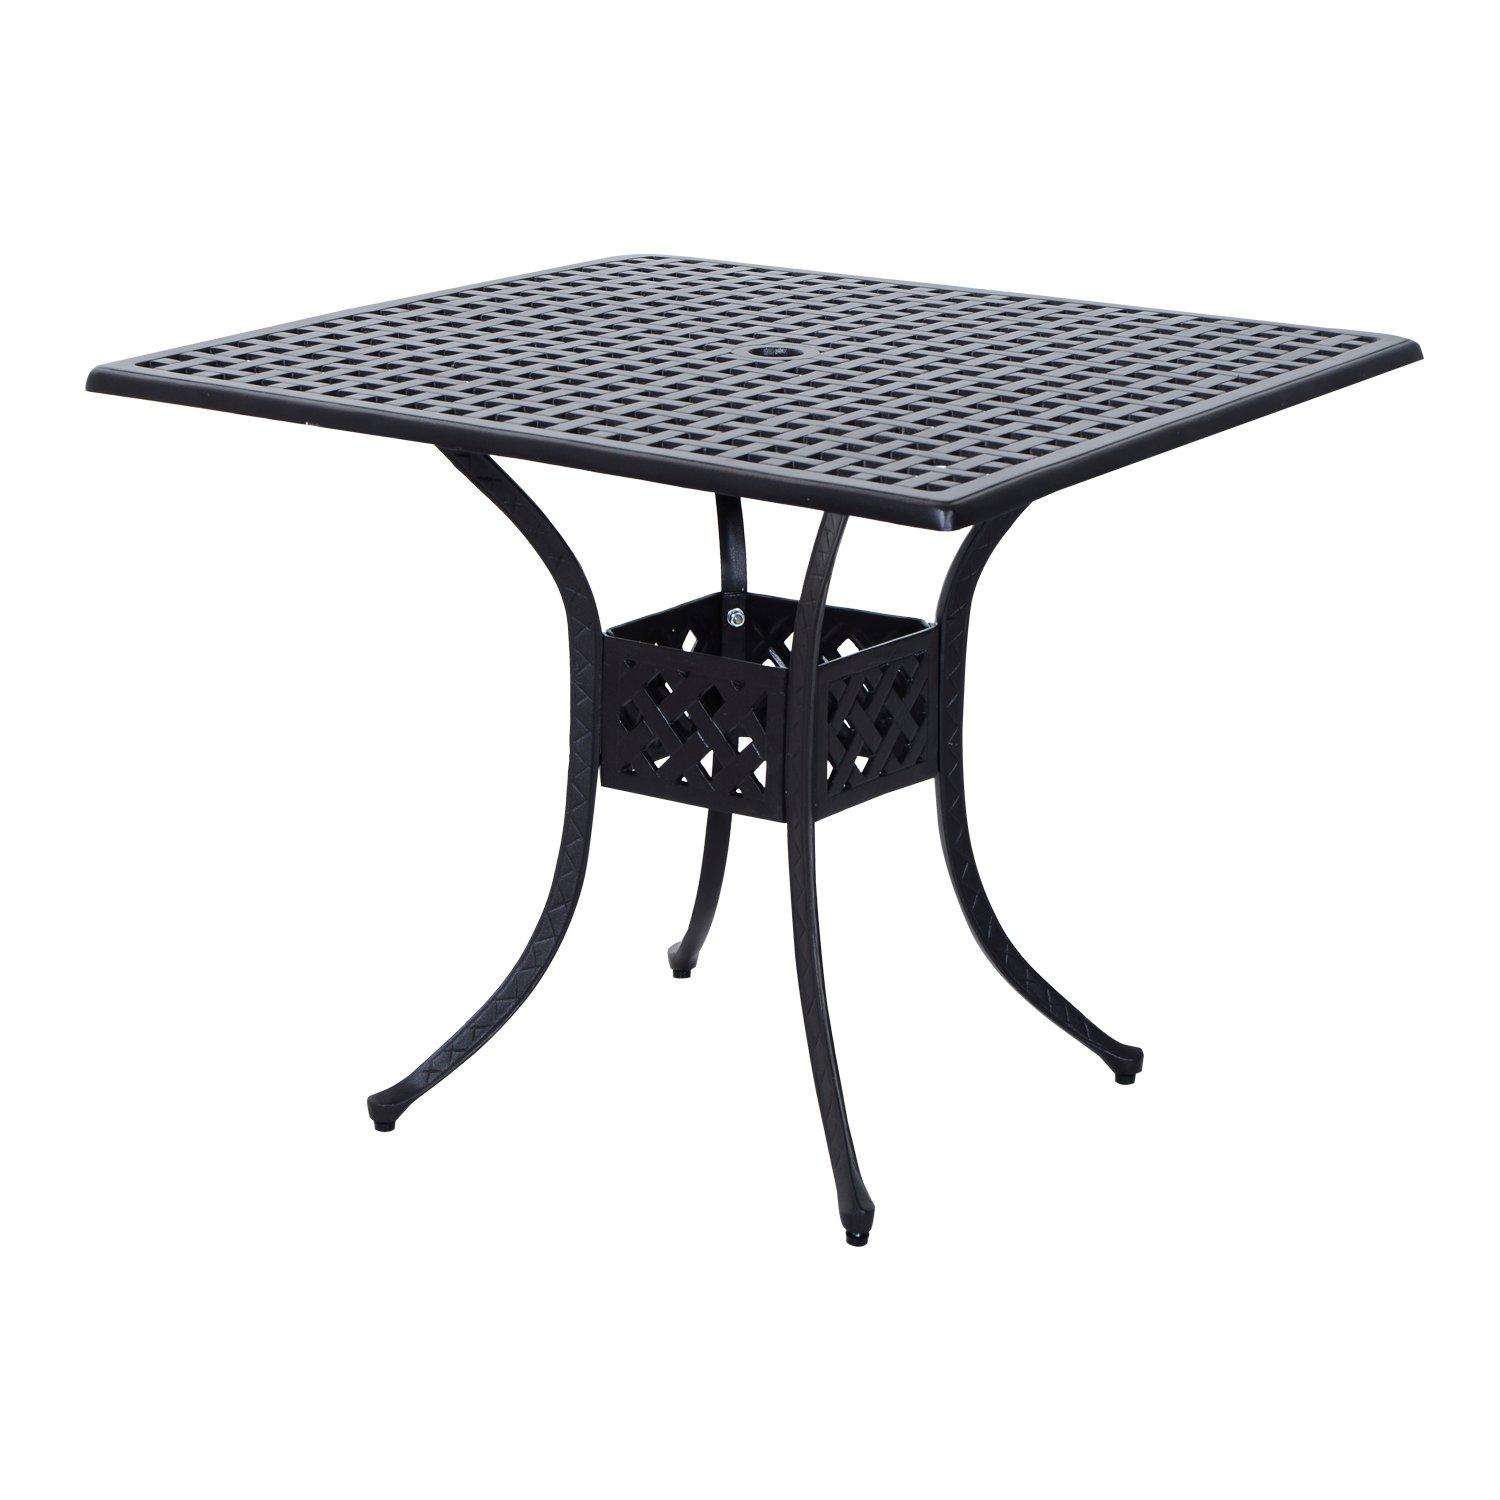 Aluminium Outdoor Garden Dining Table with Umbrella Hole, Black